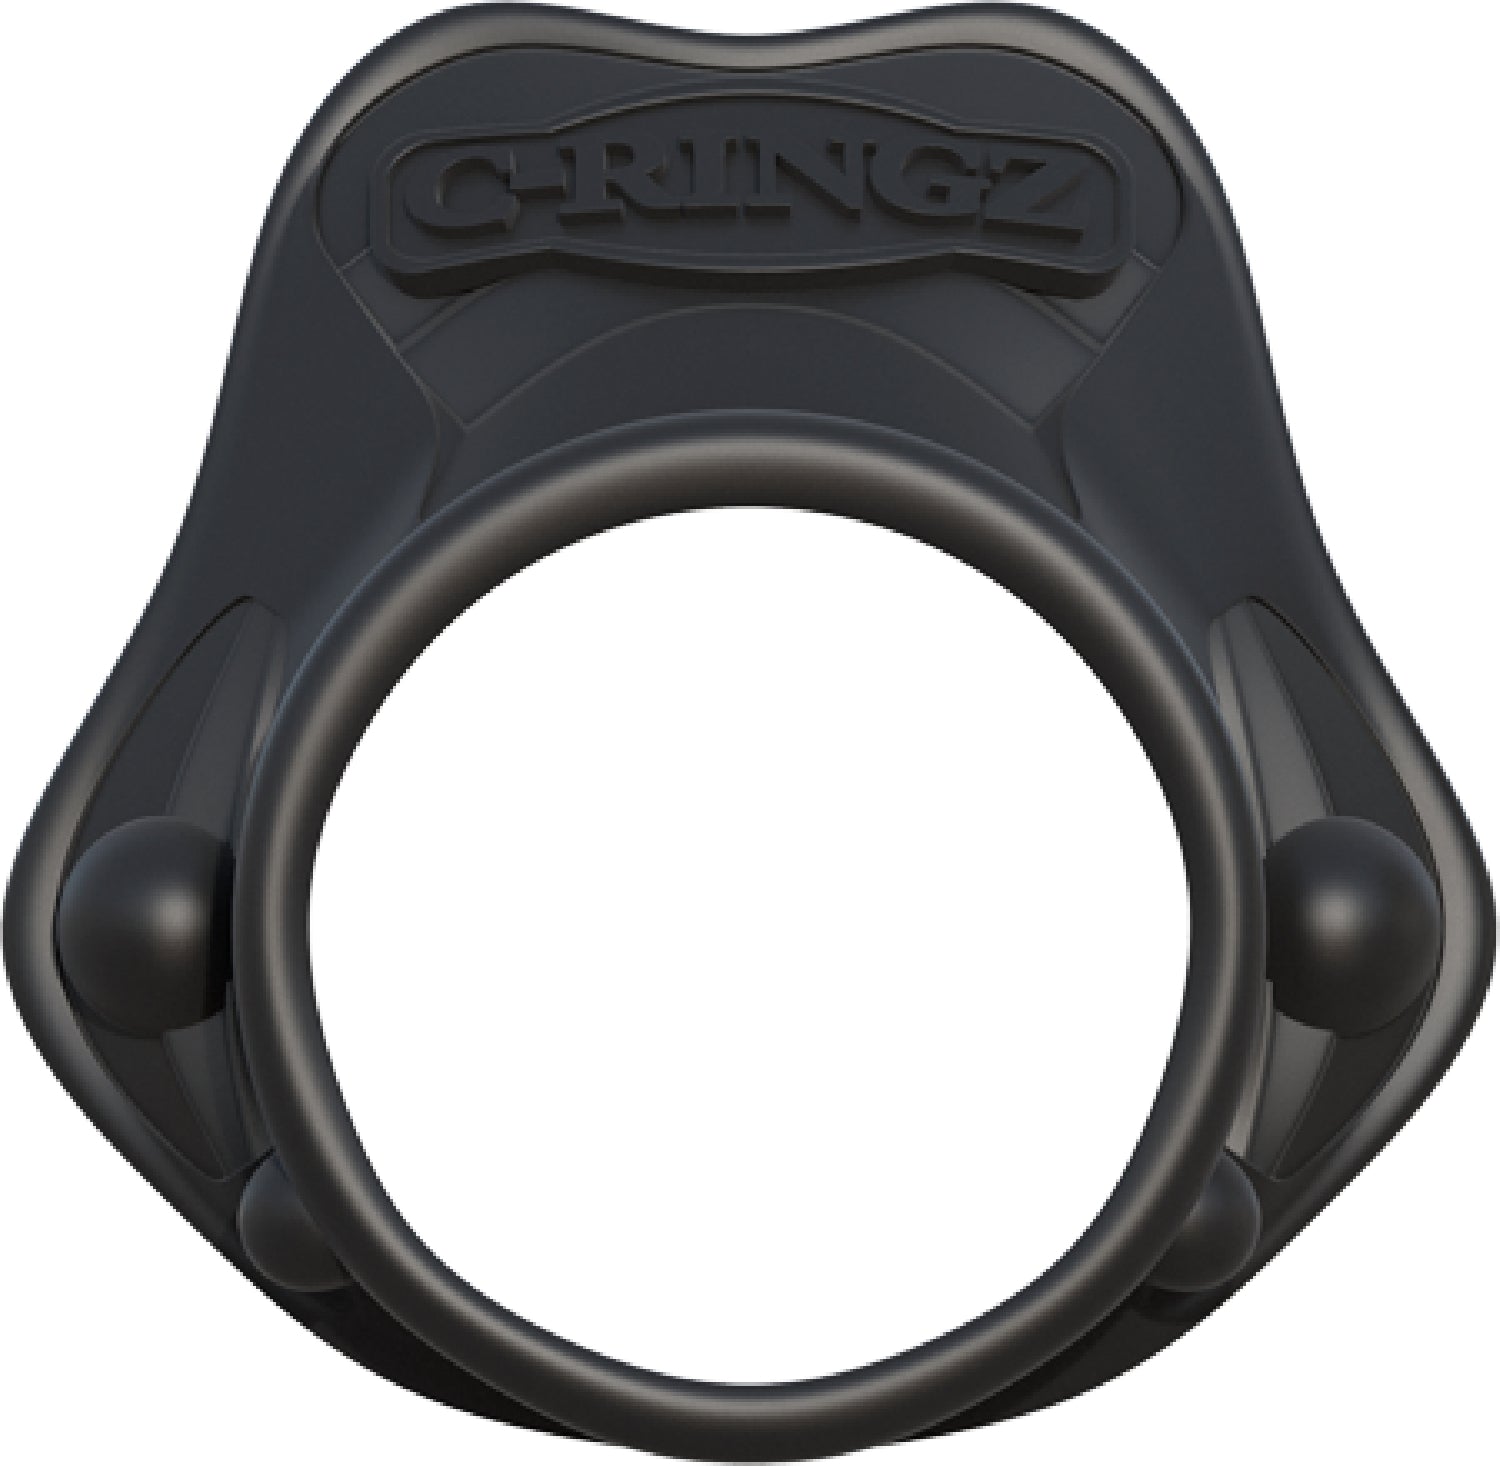 Rock Hard Ring (Black)  - Club X